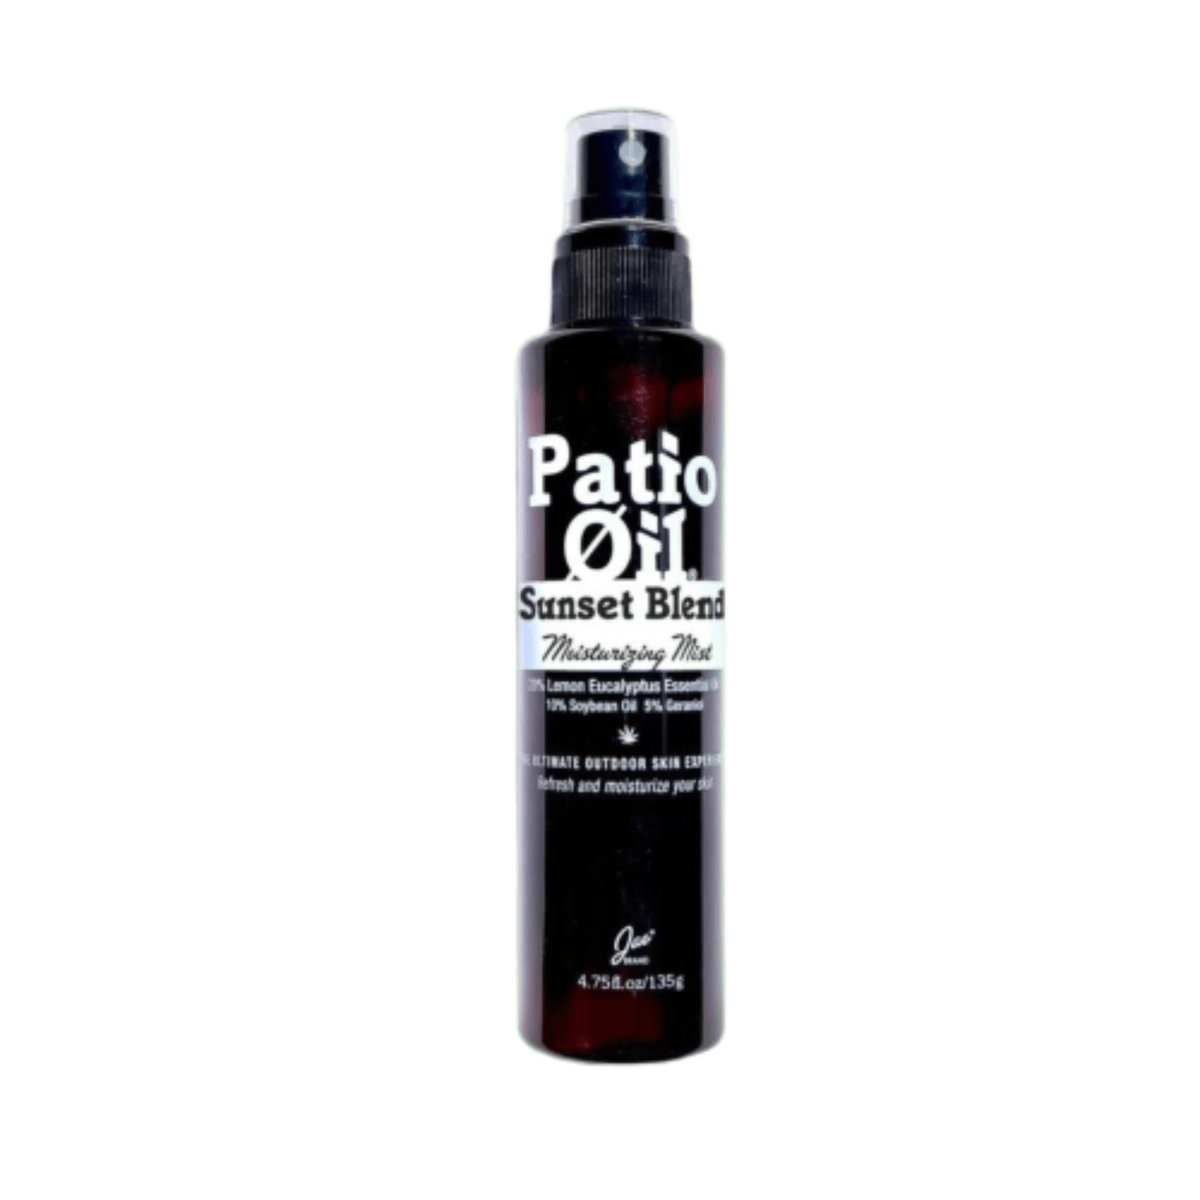 Primary Image of Patio Oil Moisture Mist